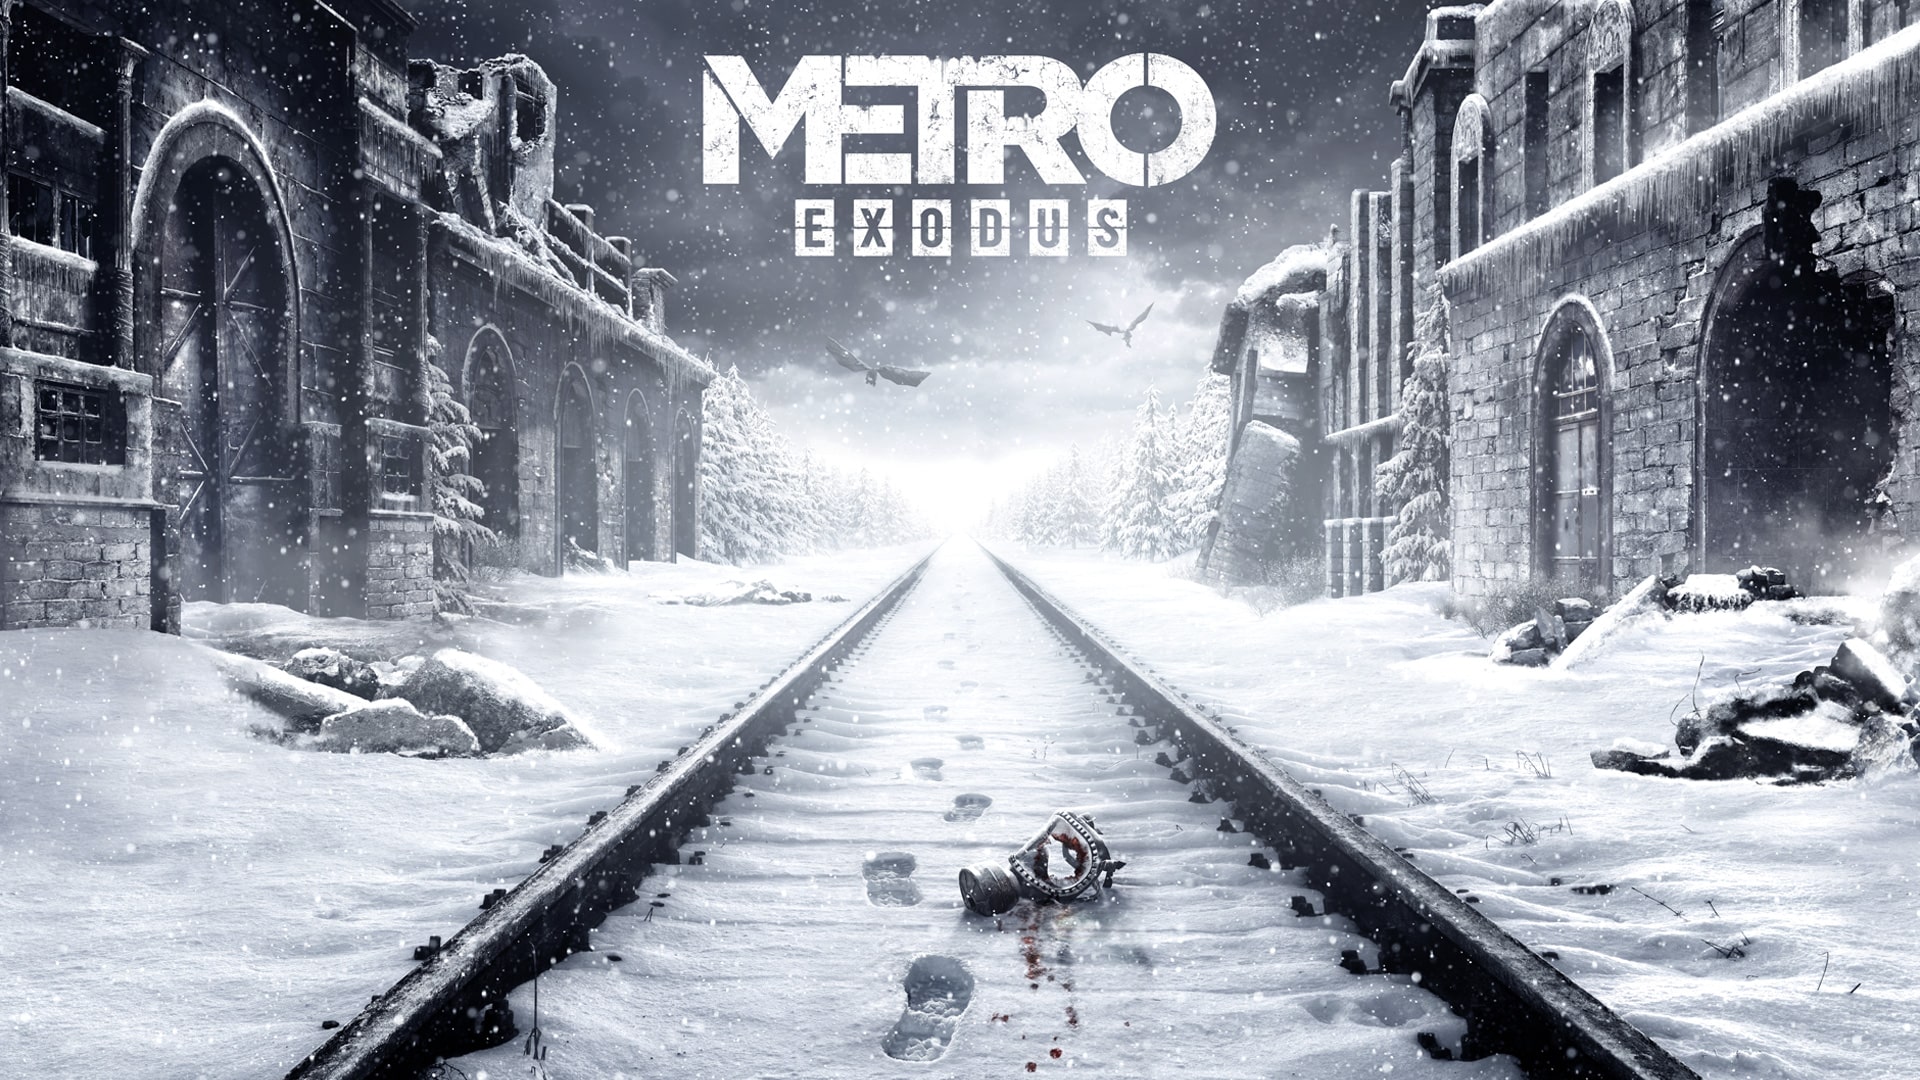 Metro Exodus Deep Silver 4A Games Xbox One